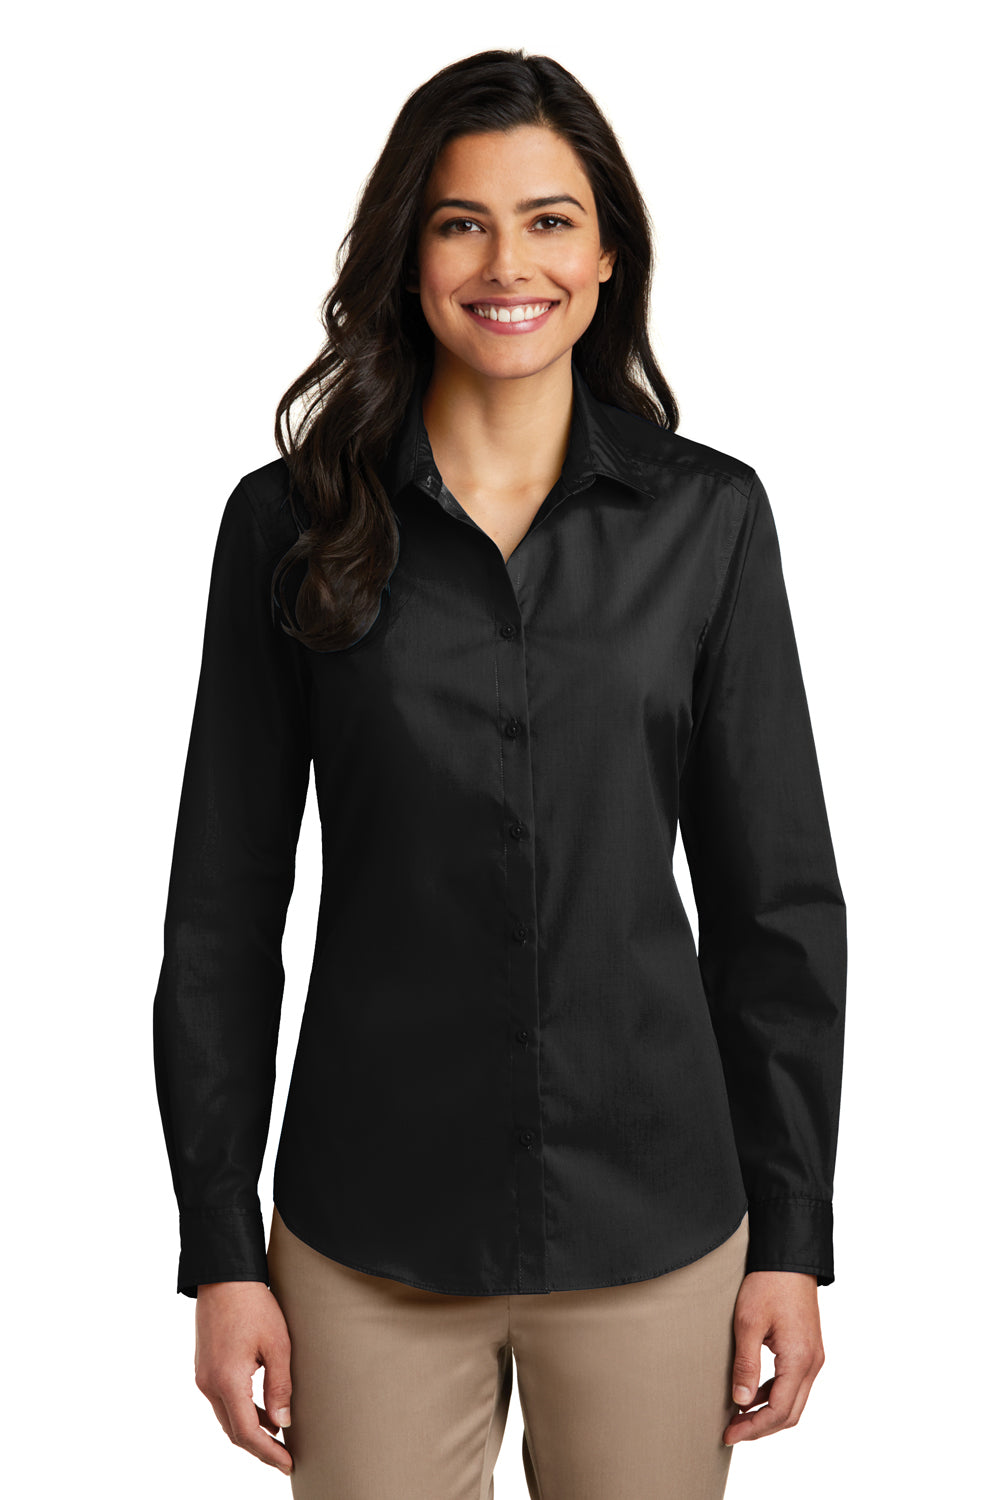 Sagging technical reliability womens black button down dress shirt ...